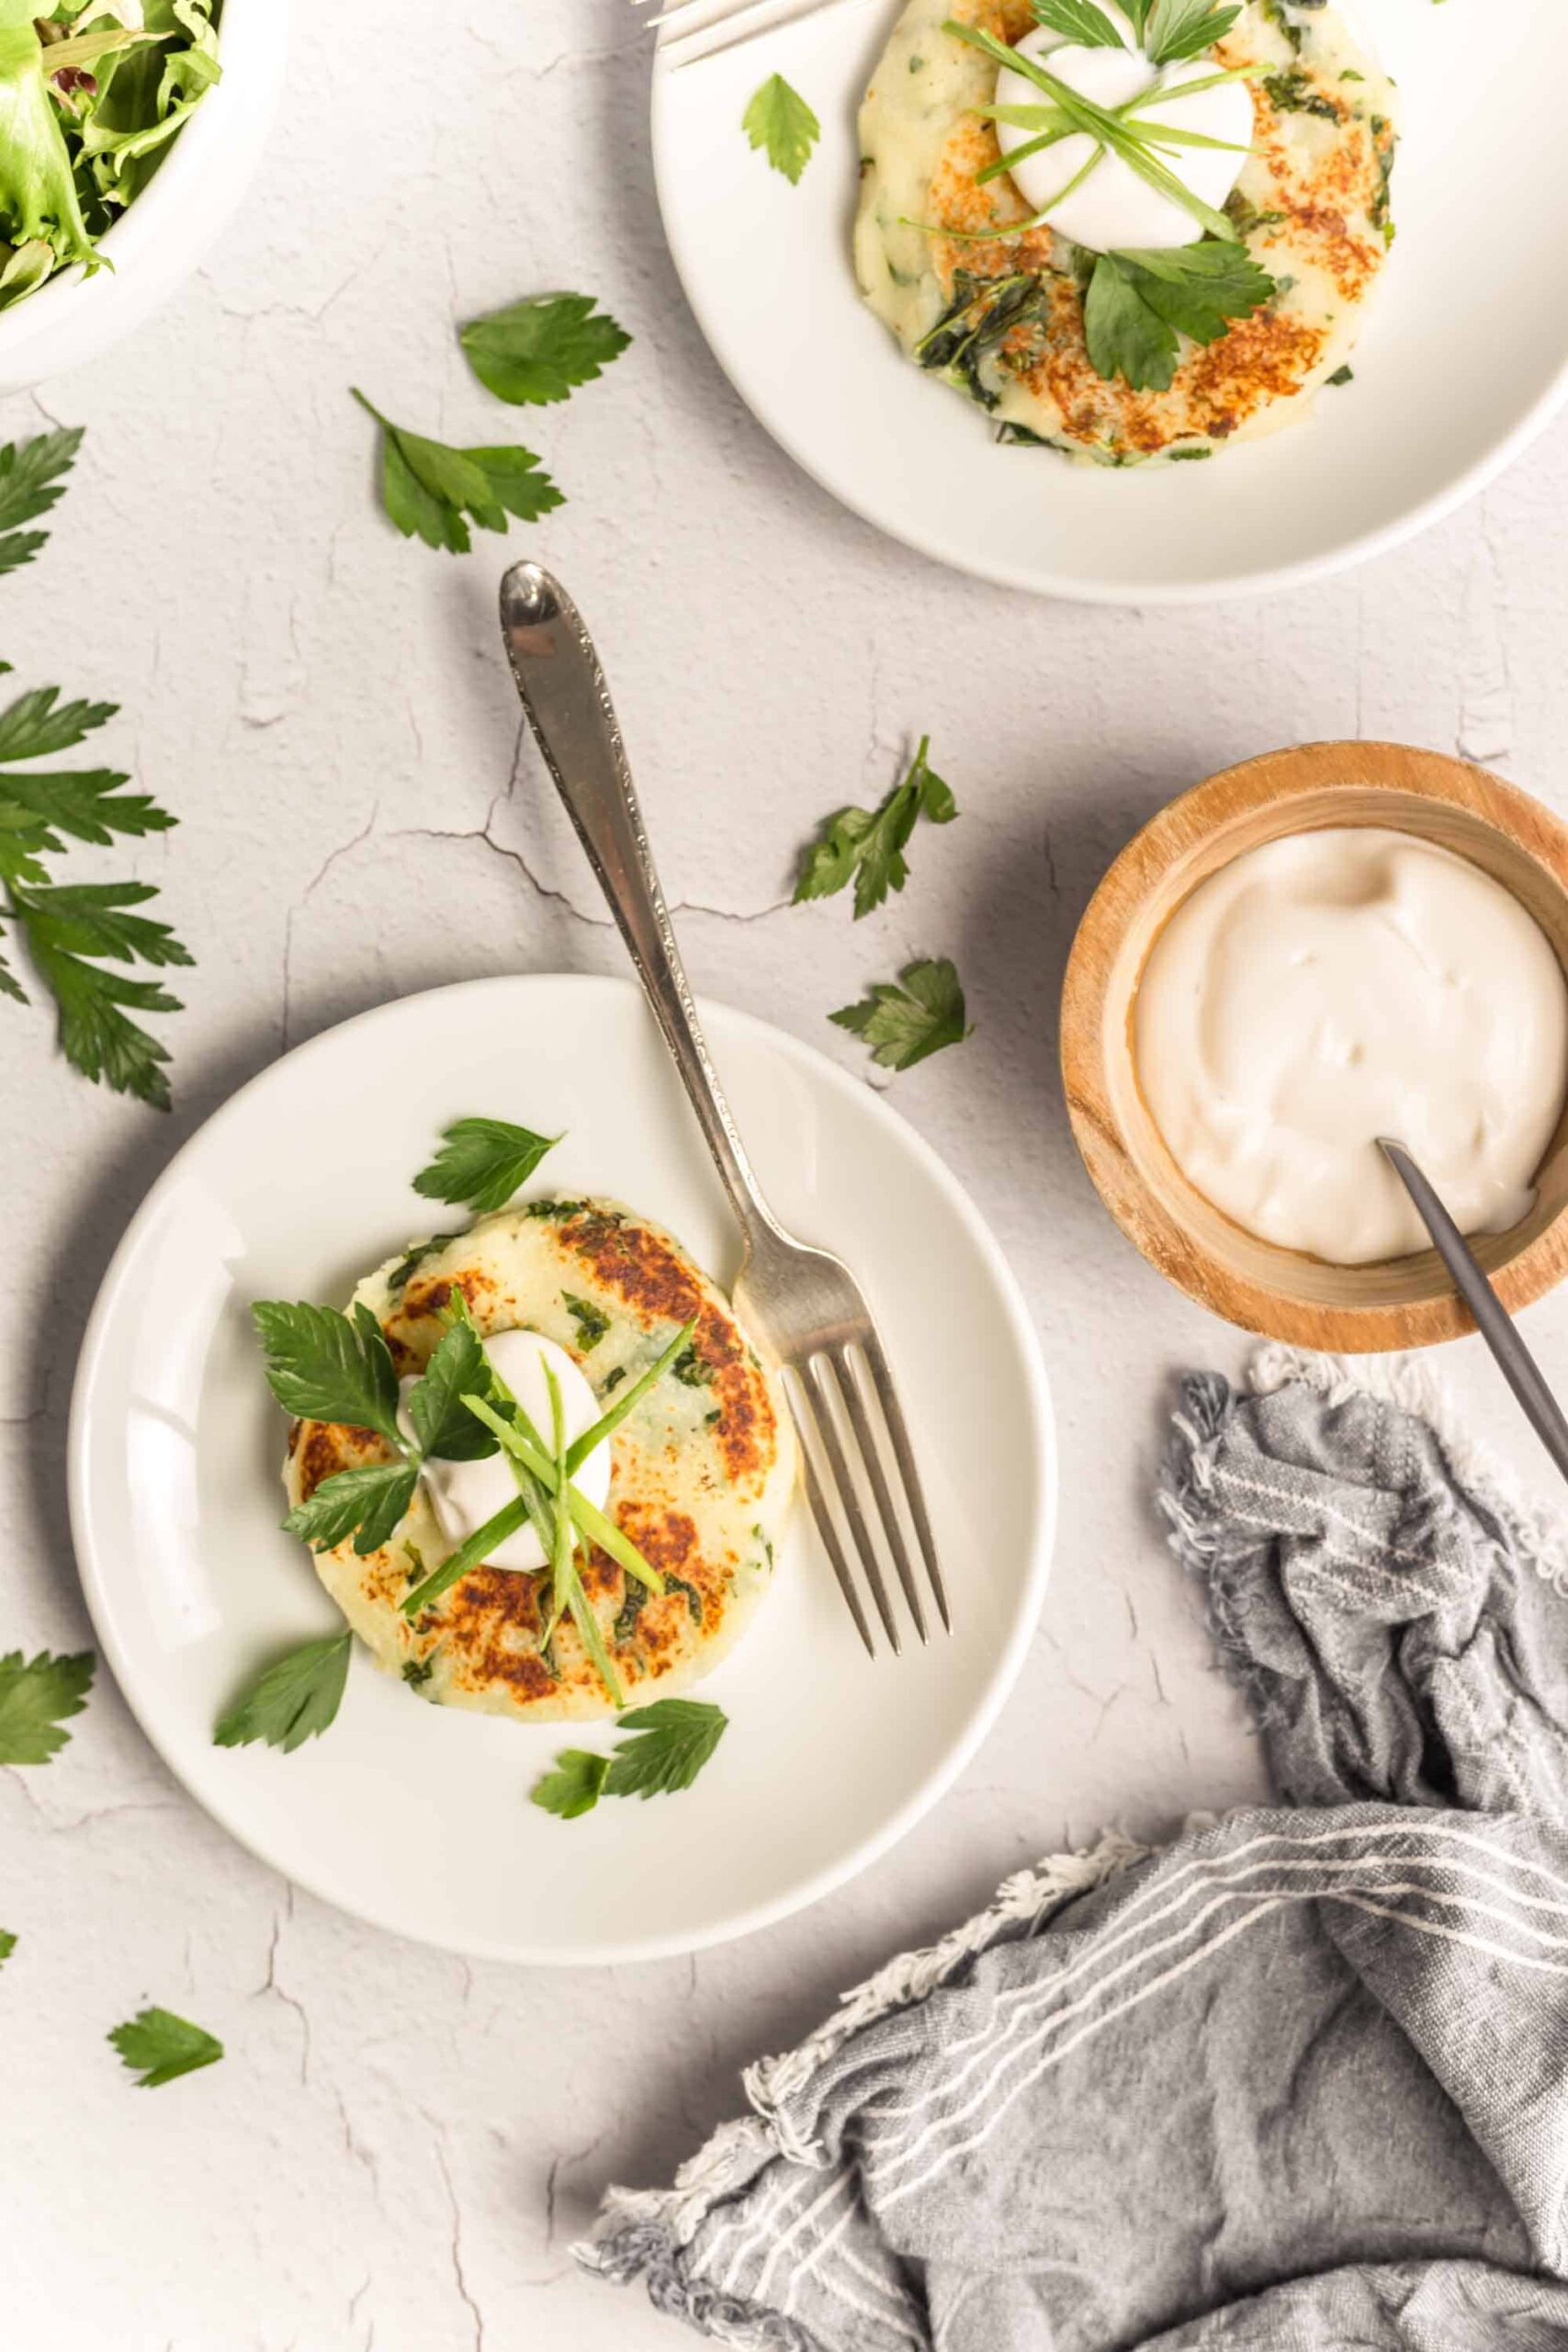 Vegan Potato Cakes Recipe With Kale by Mary Mattern 